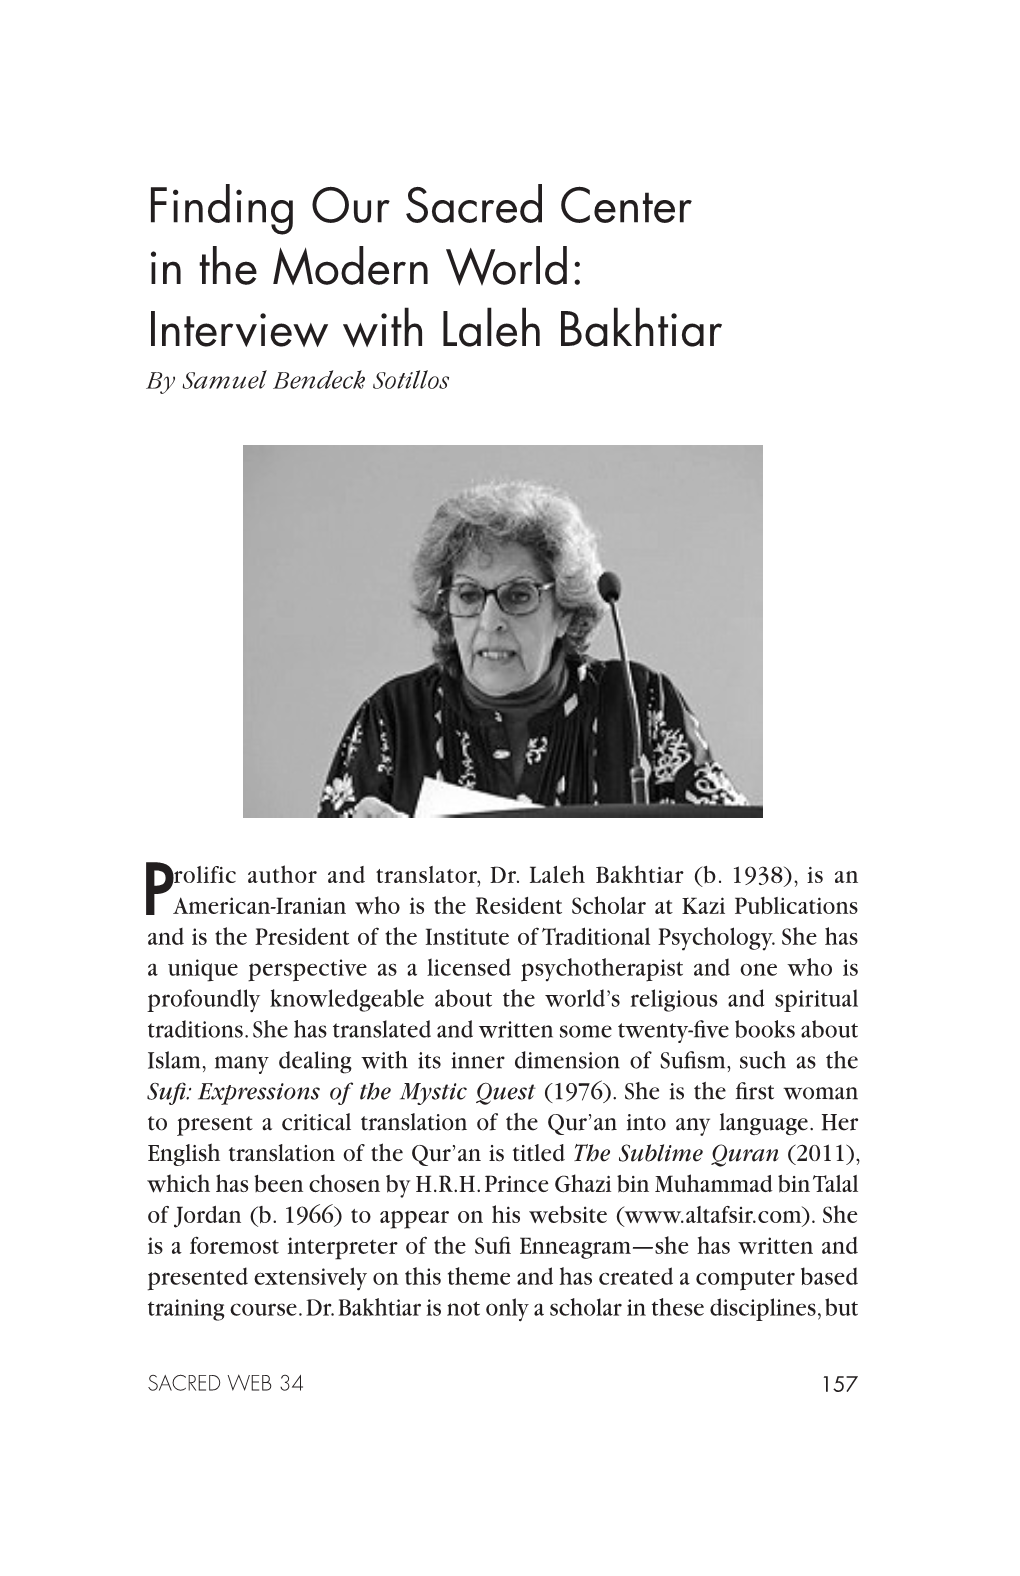 Interview with Laleh Bakhtiar by Samuel Bendeck Sotillos